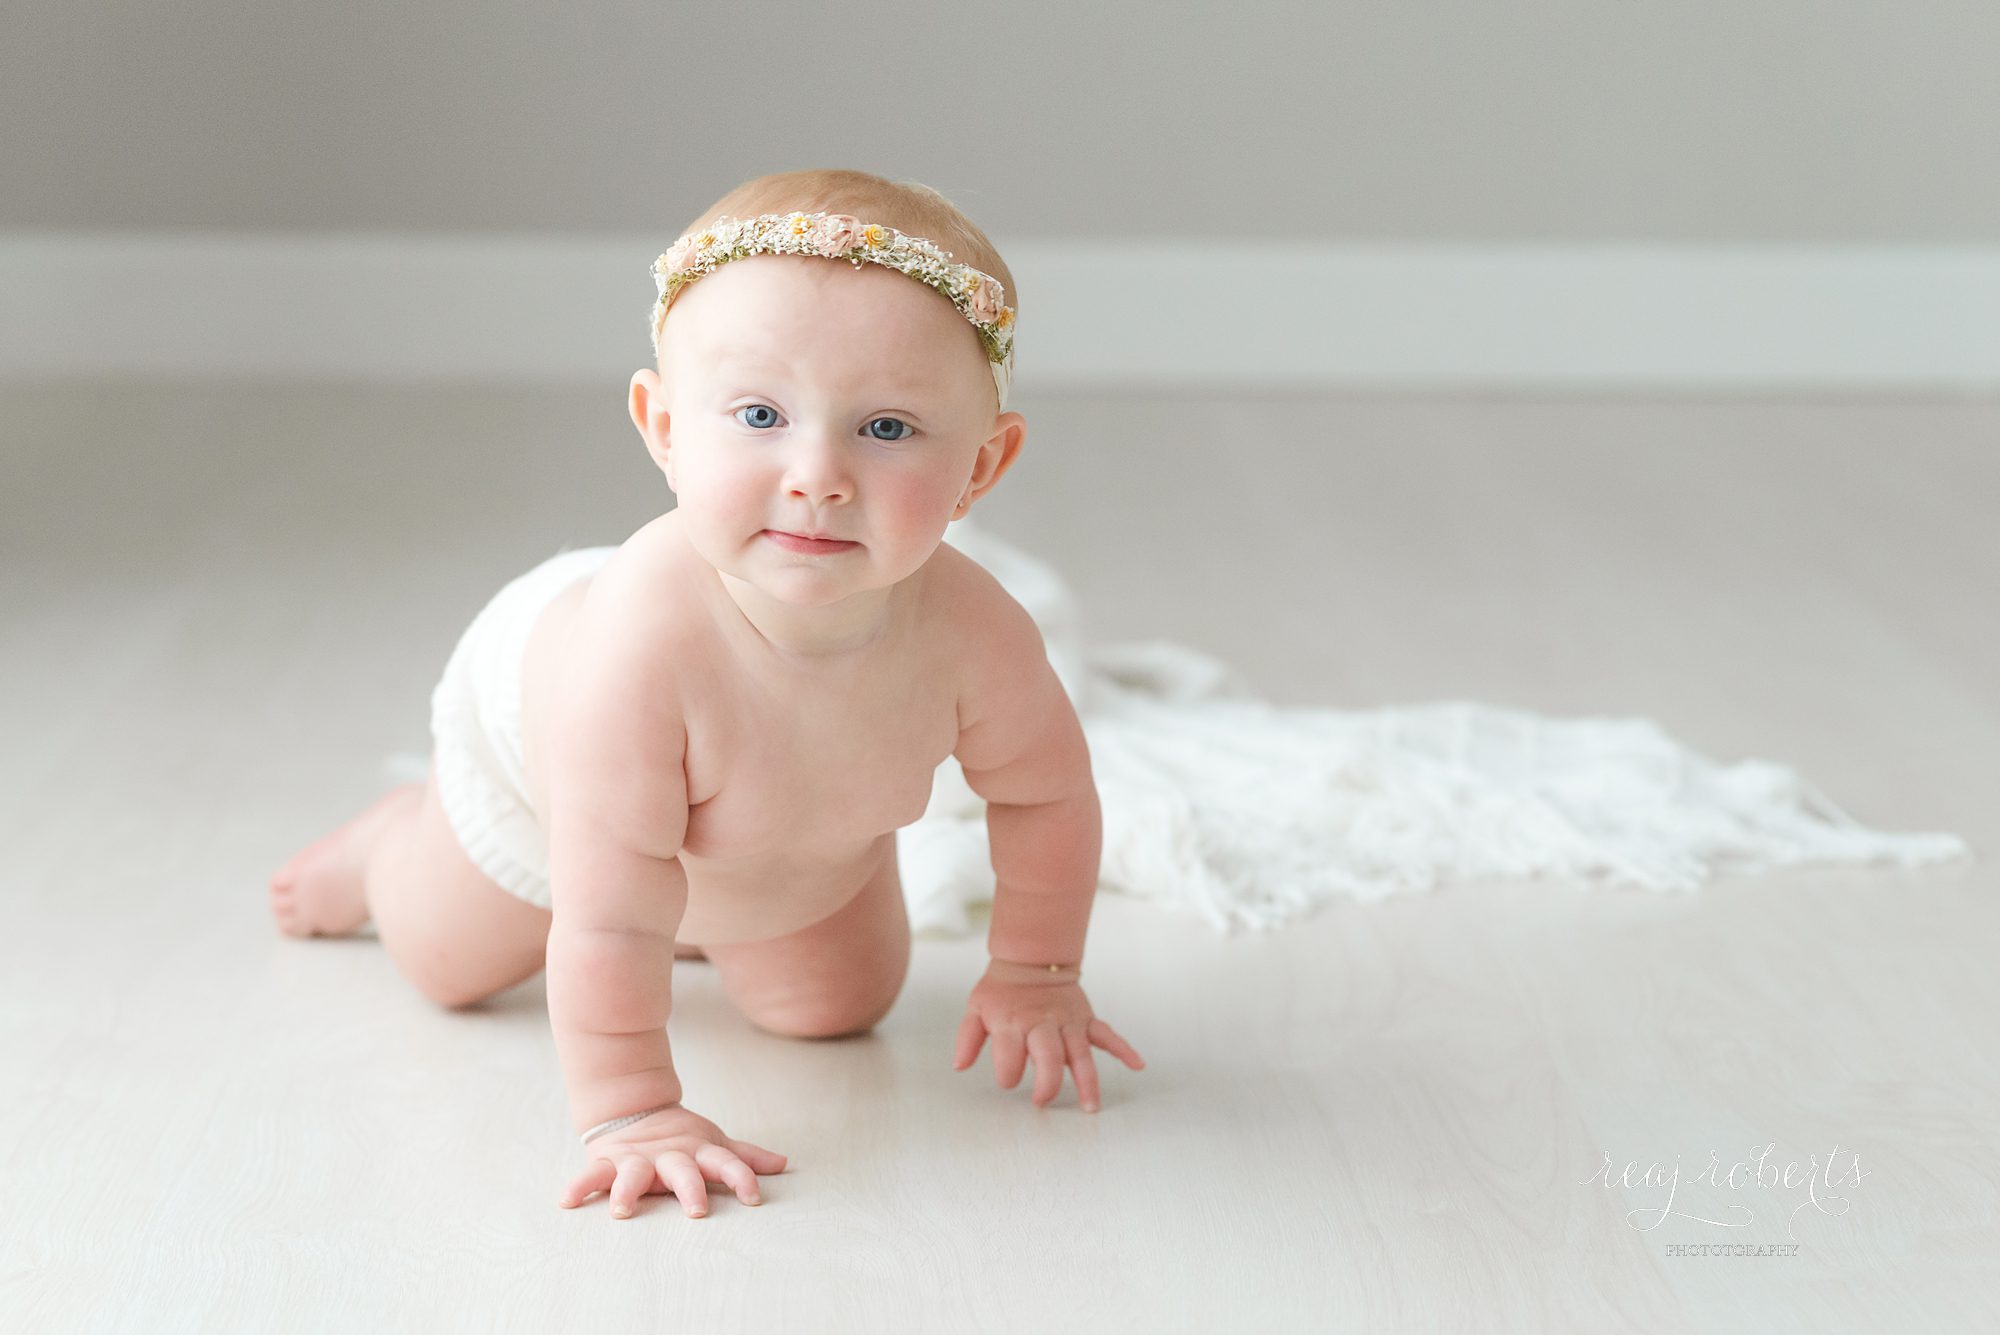 Baby girl crawling first birthday photos | Phoenix photographer Reaj Roberts Photography